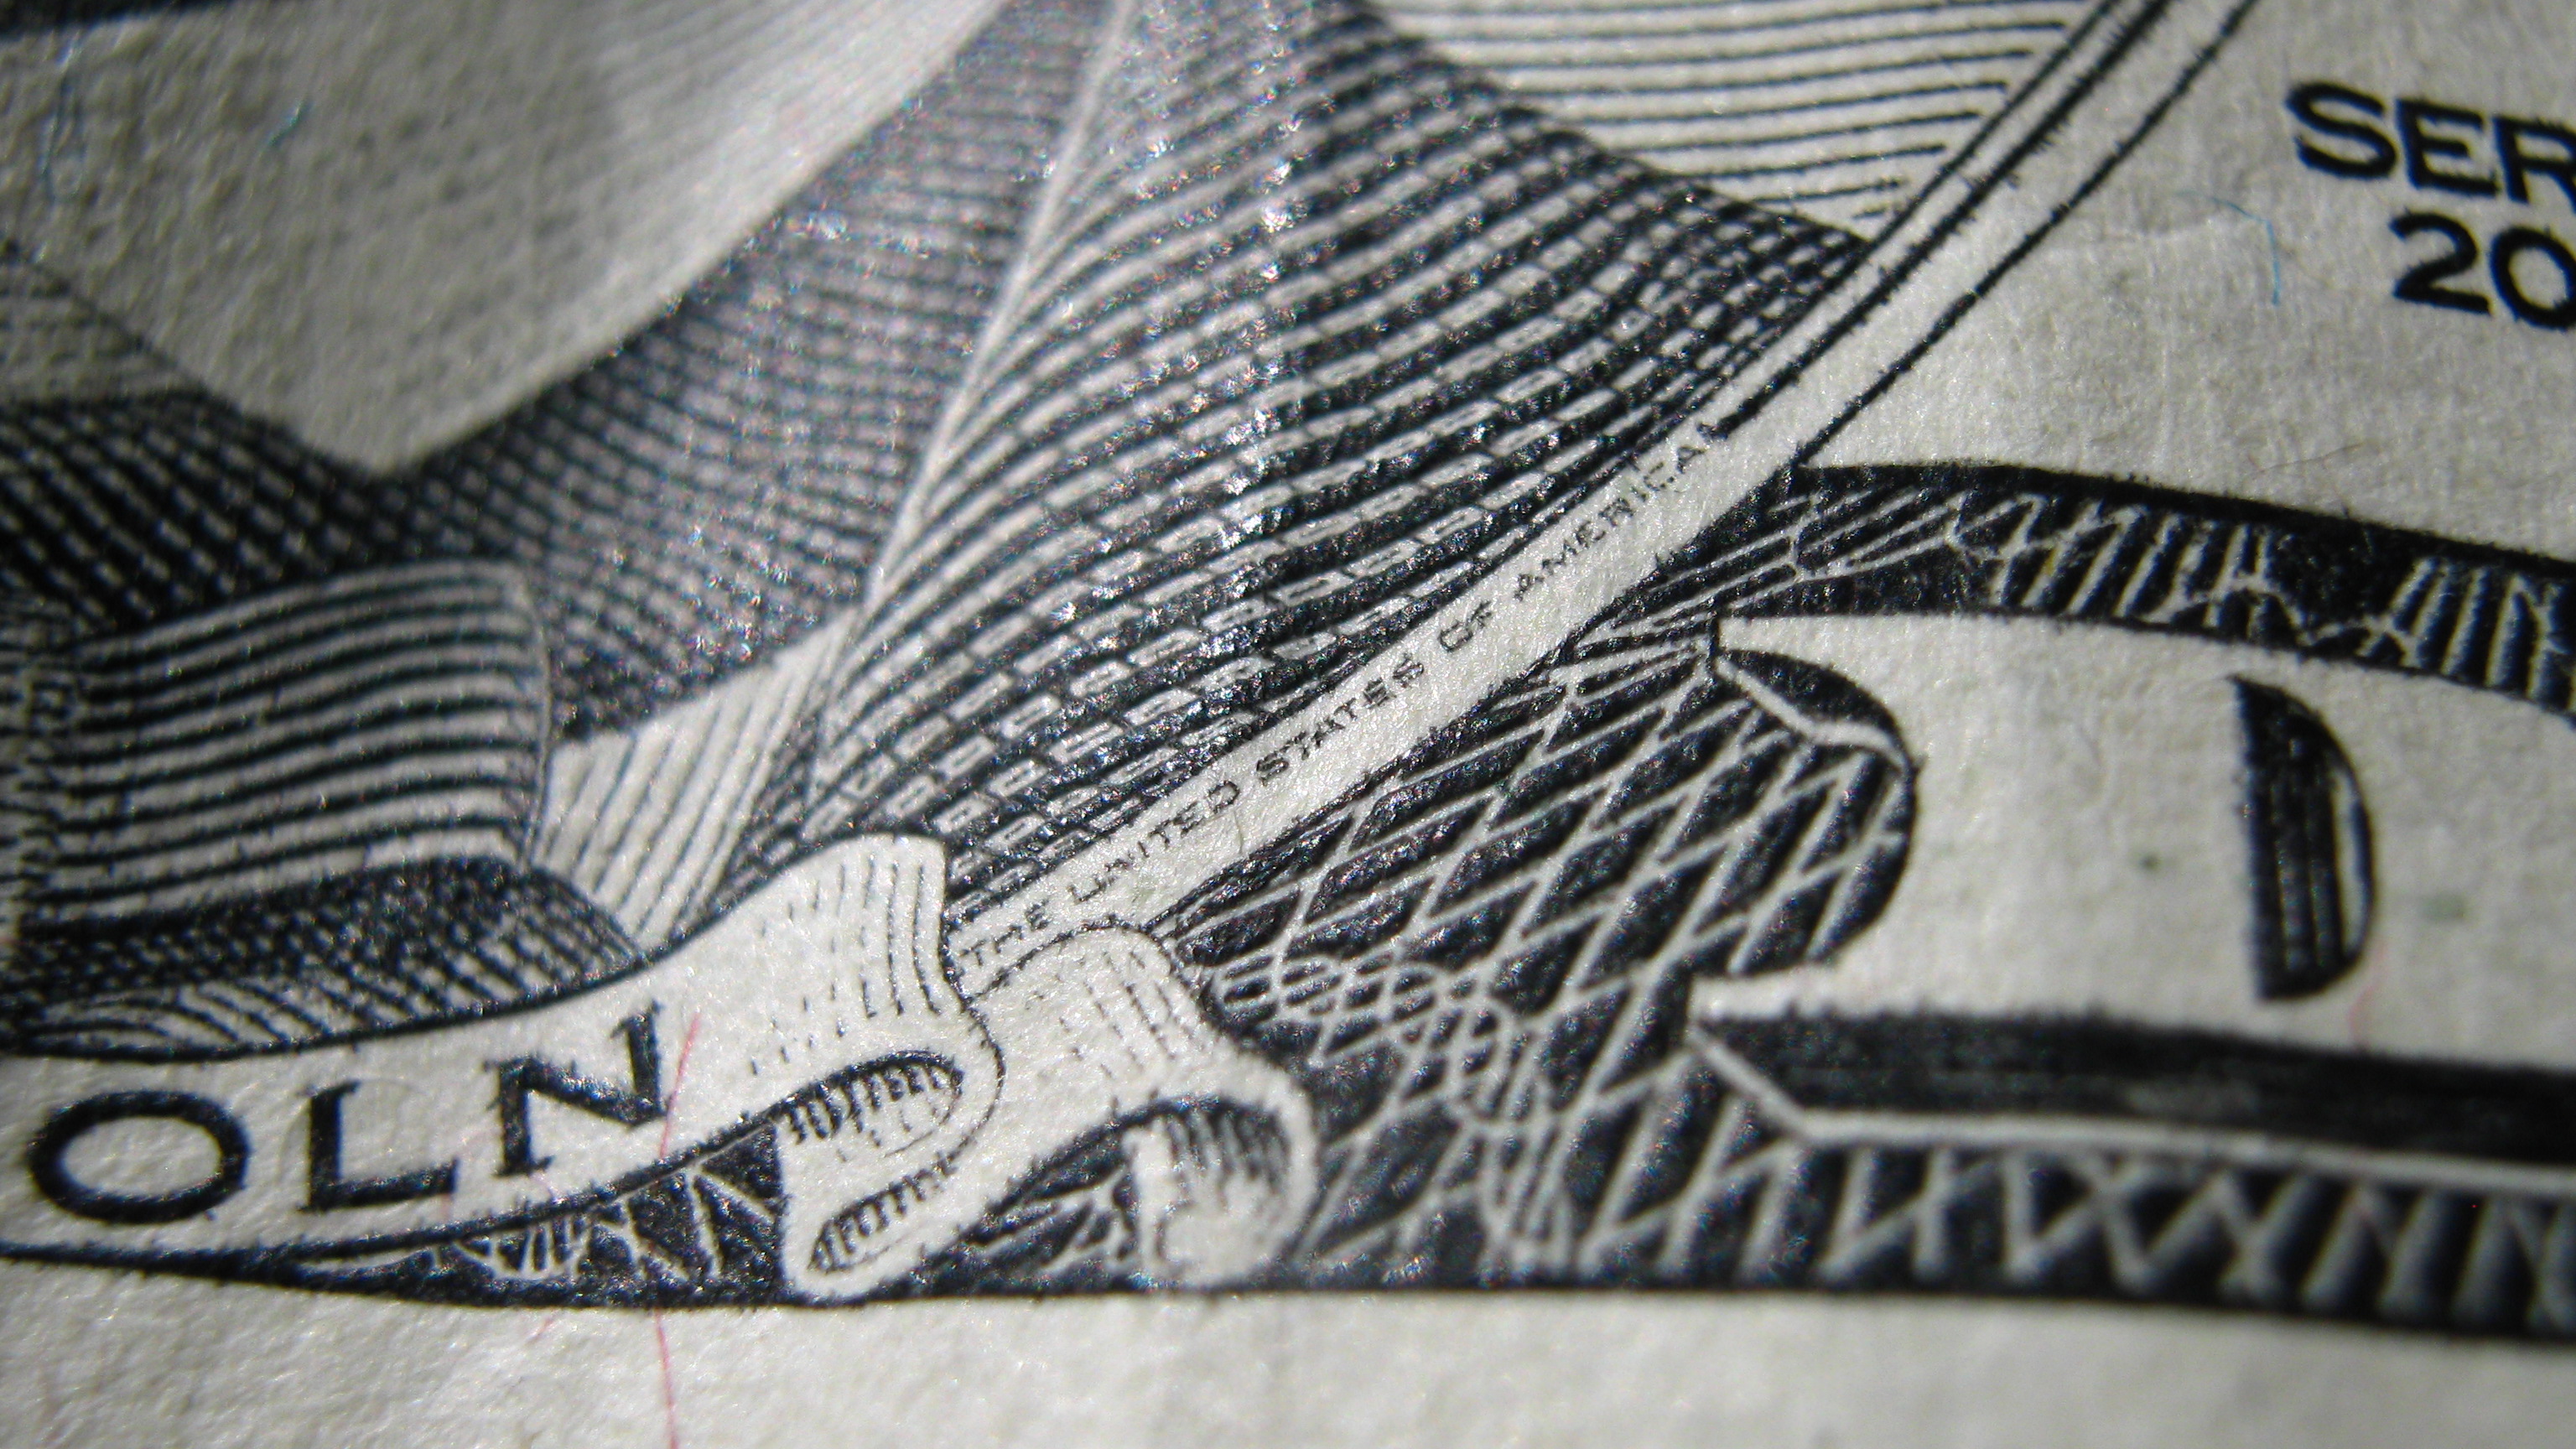 Man Made Money HD Wallpaper | Background Image